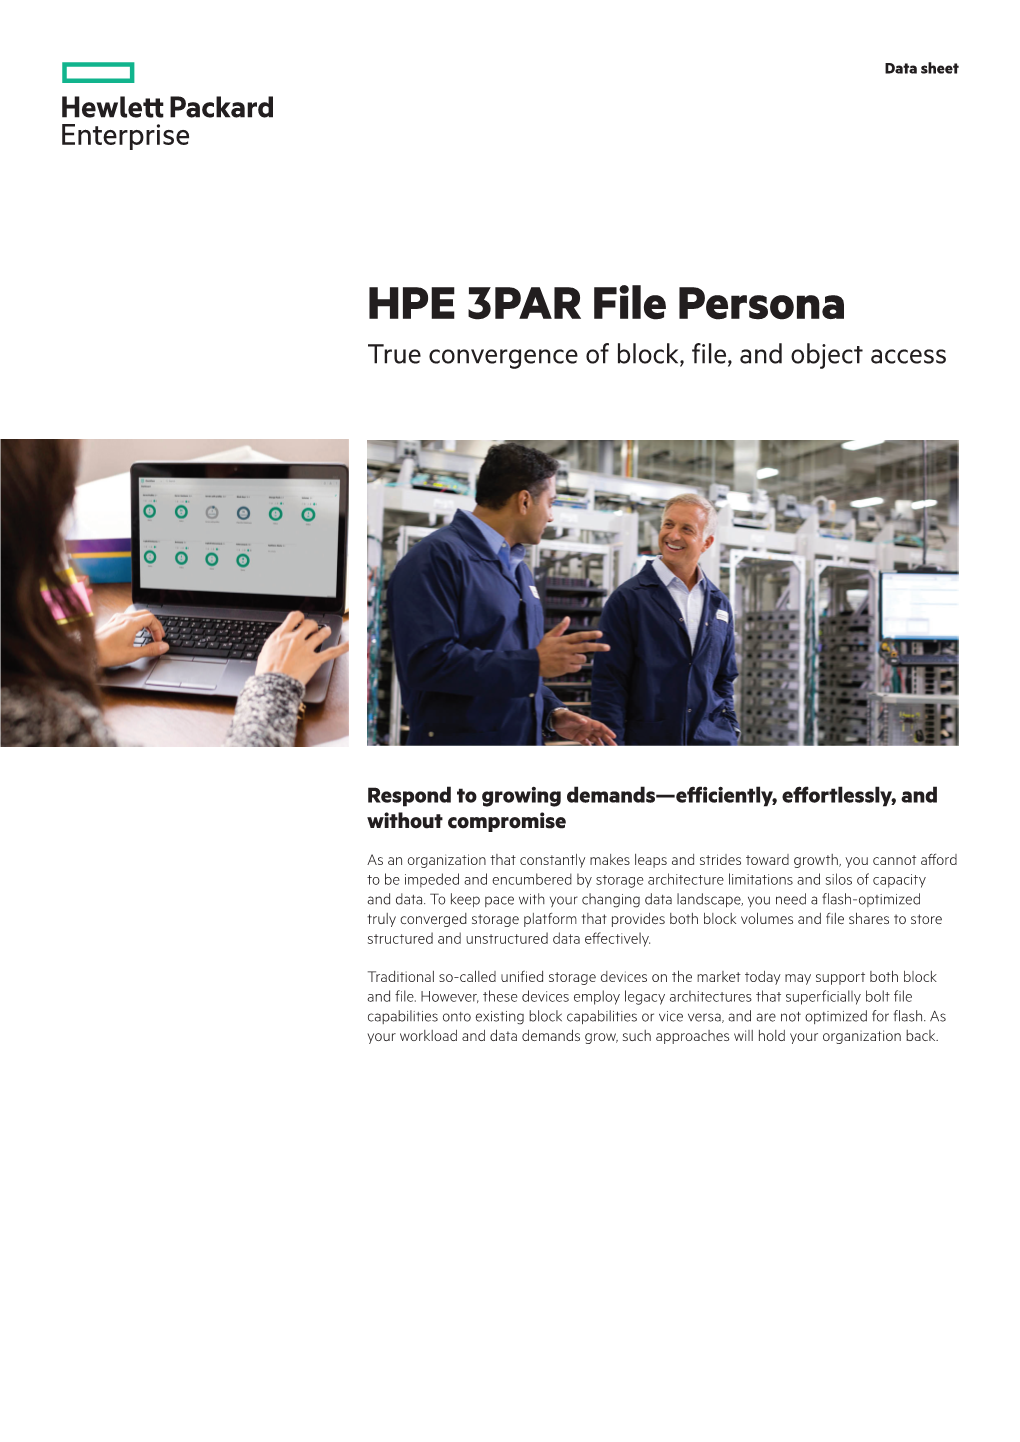 HPE 3PAR File Persona Data Sheet